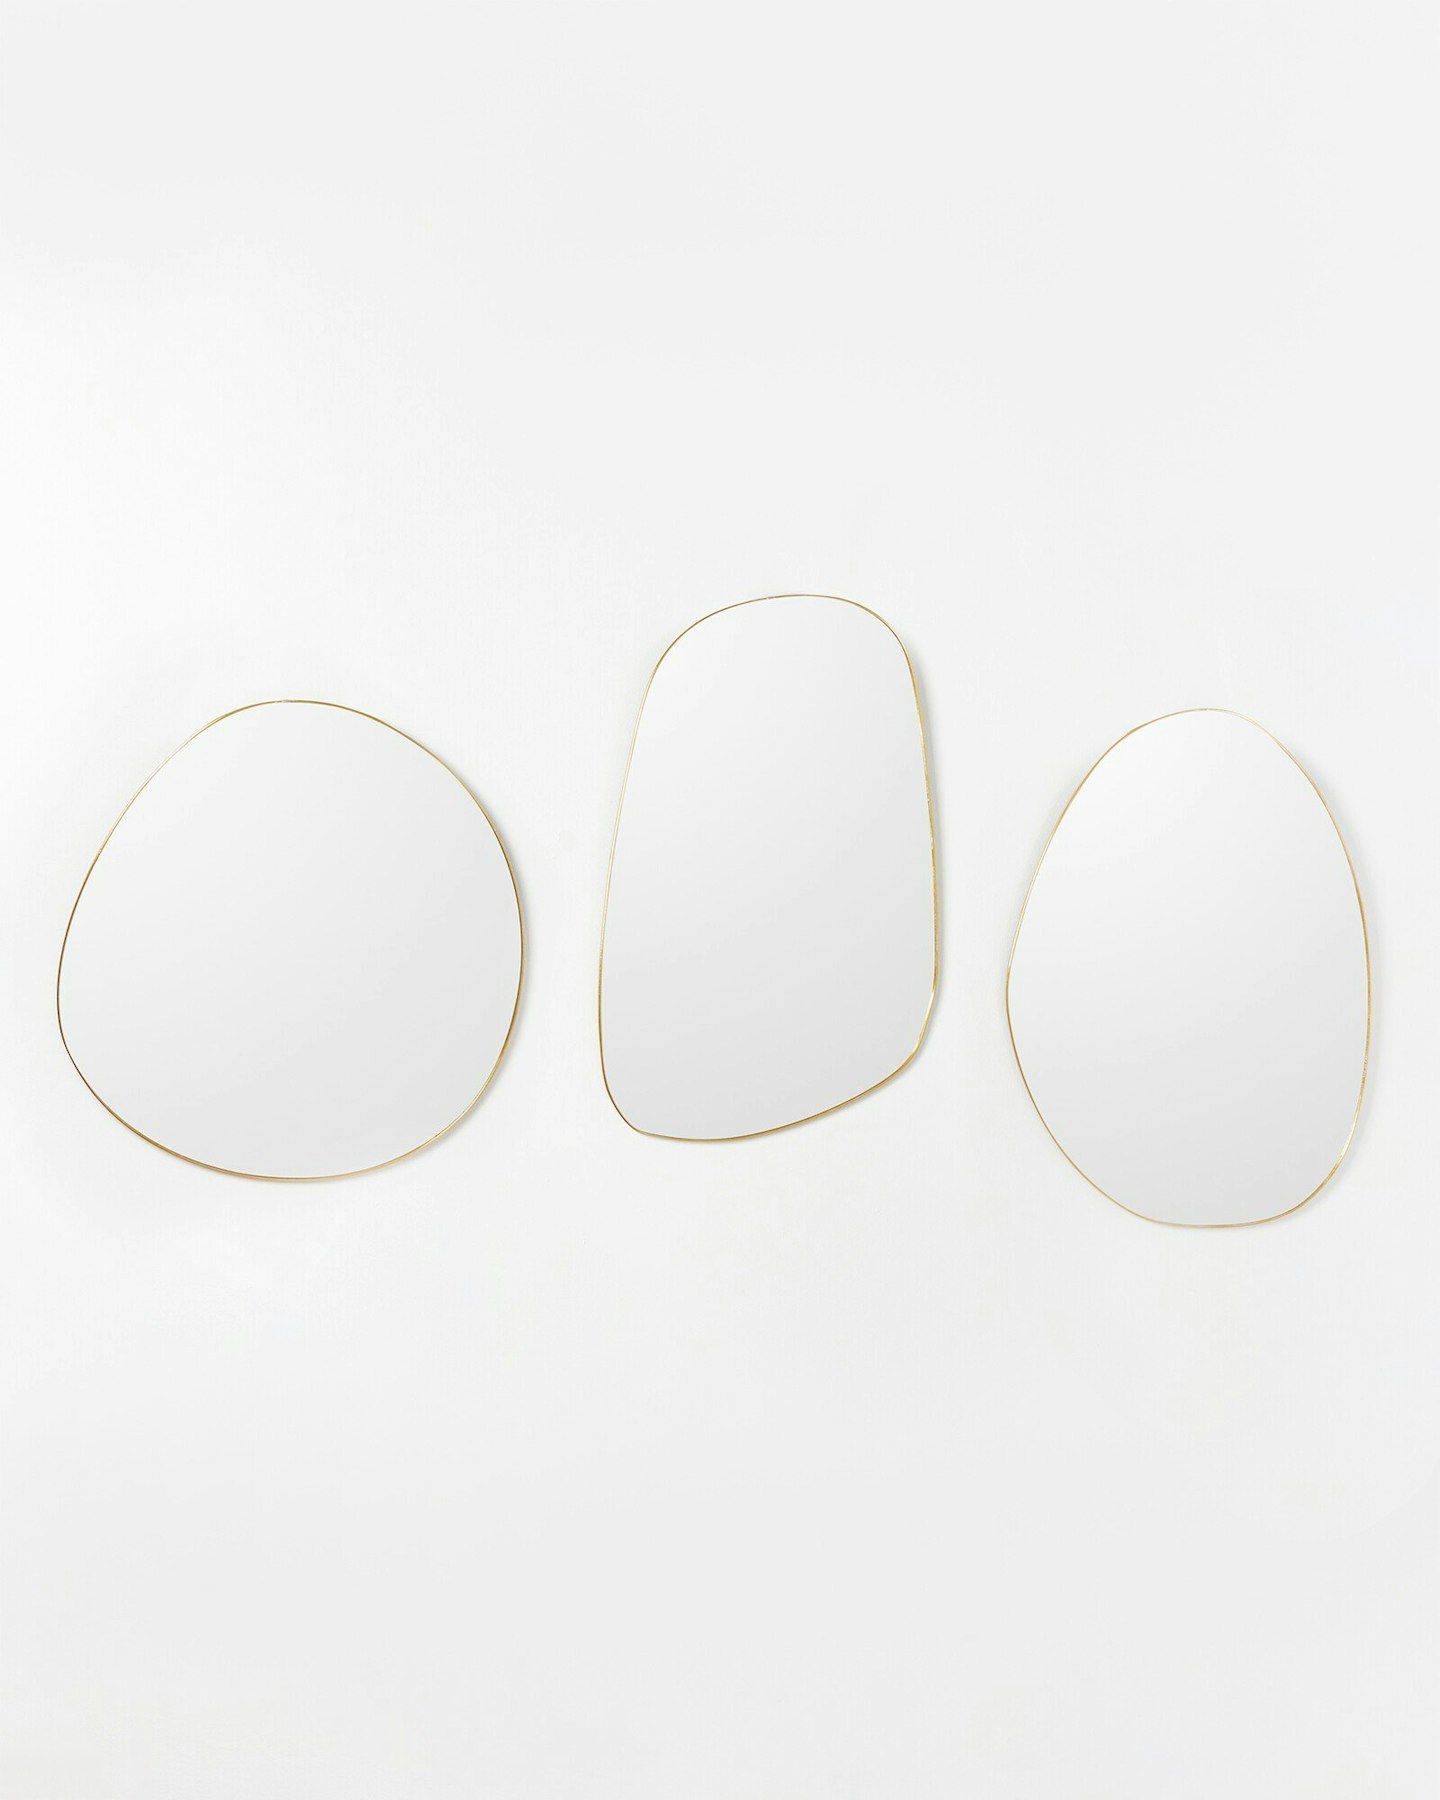 Oliver Bonas, Pebble Hanging Gold & Glass Wall Mirrors Set of Three, £69.50